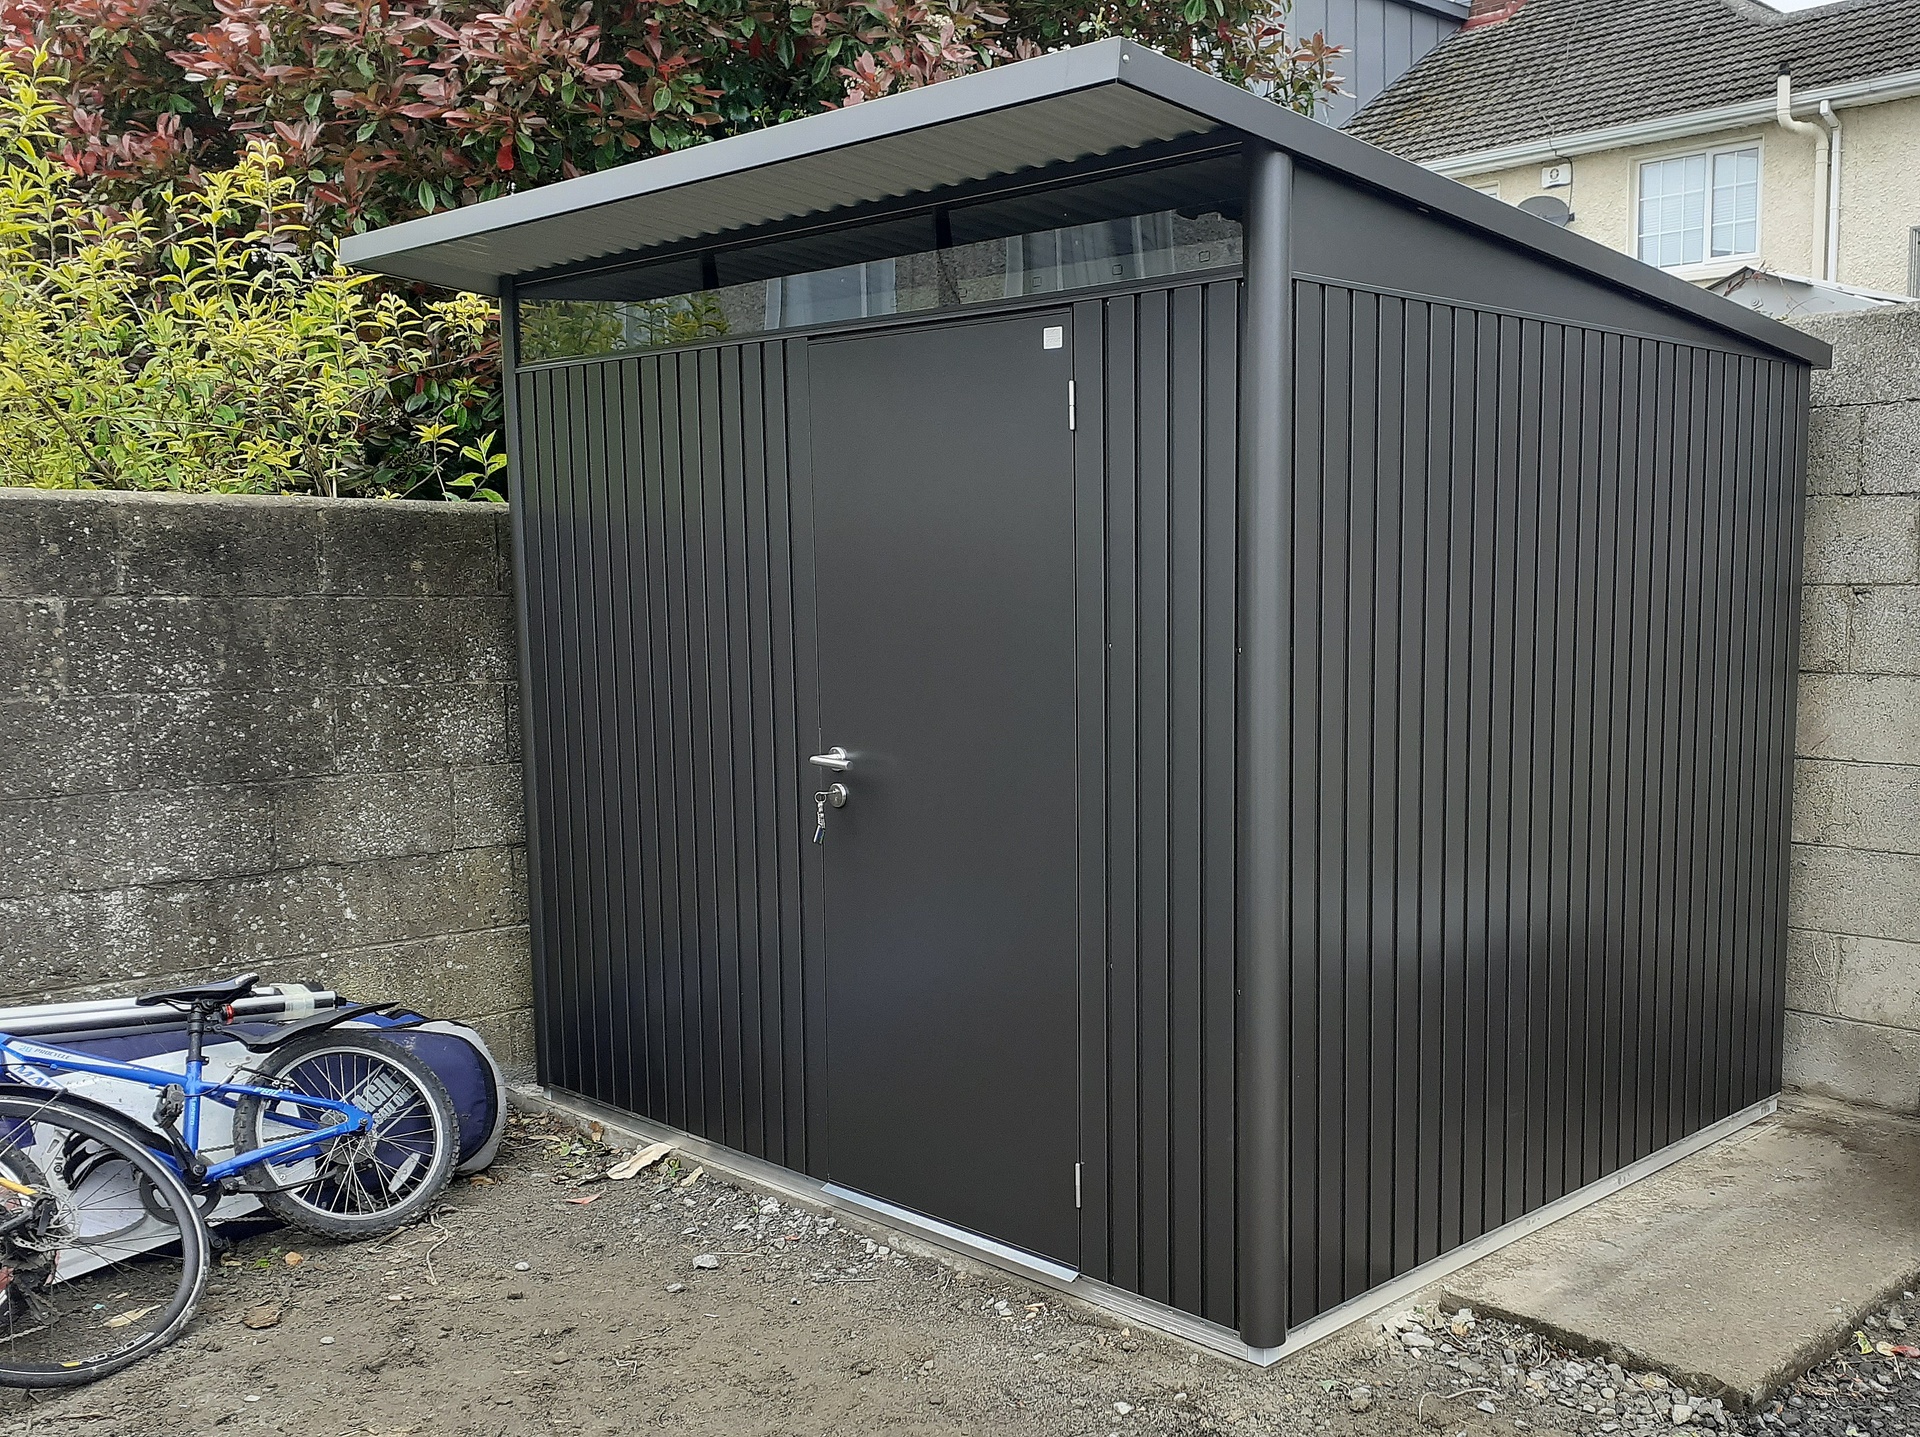 Biohort AvantGarde A6 Garden Shed in metallic dark grey, modern secure & weatherproof  garden storage - supplied + fitted in Raheny, Dublin 5 | Owen Chubb Garden Landscapers, Tel 087-2306128.